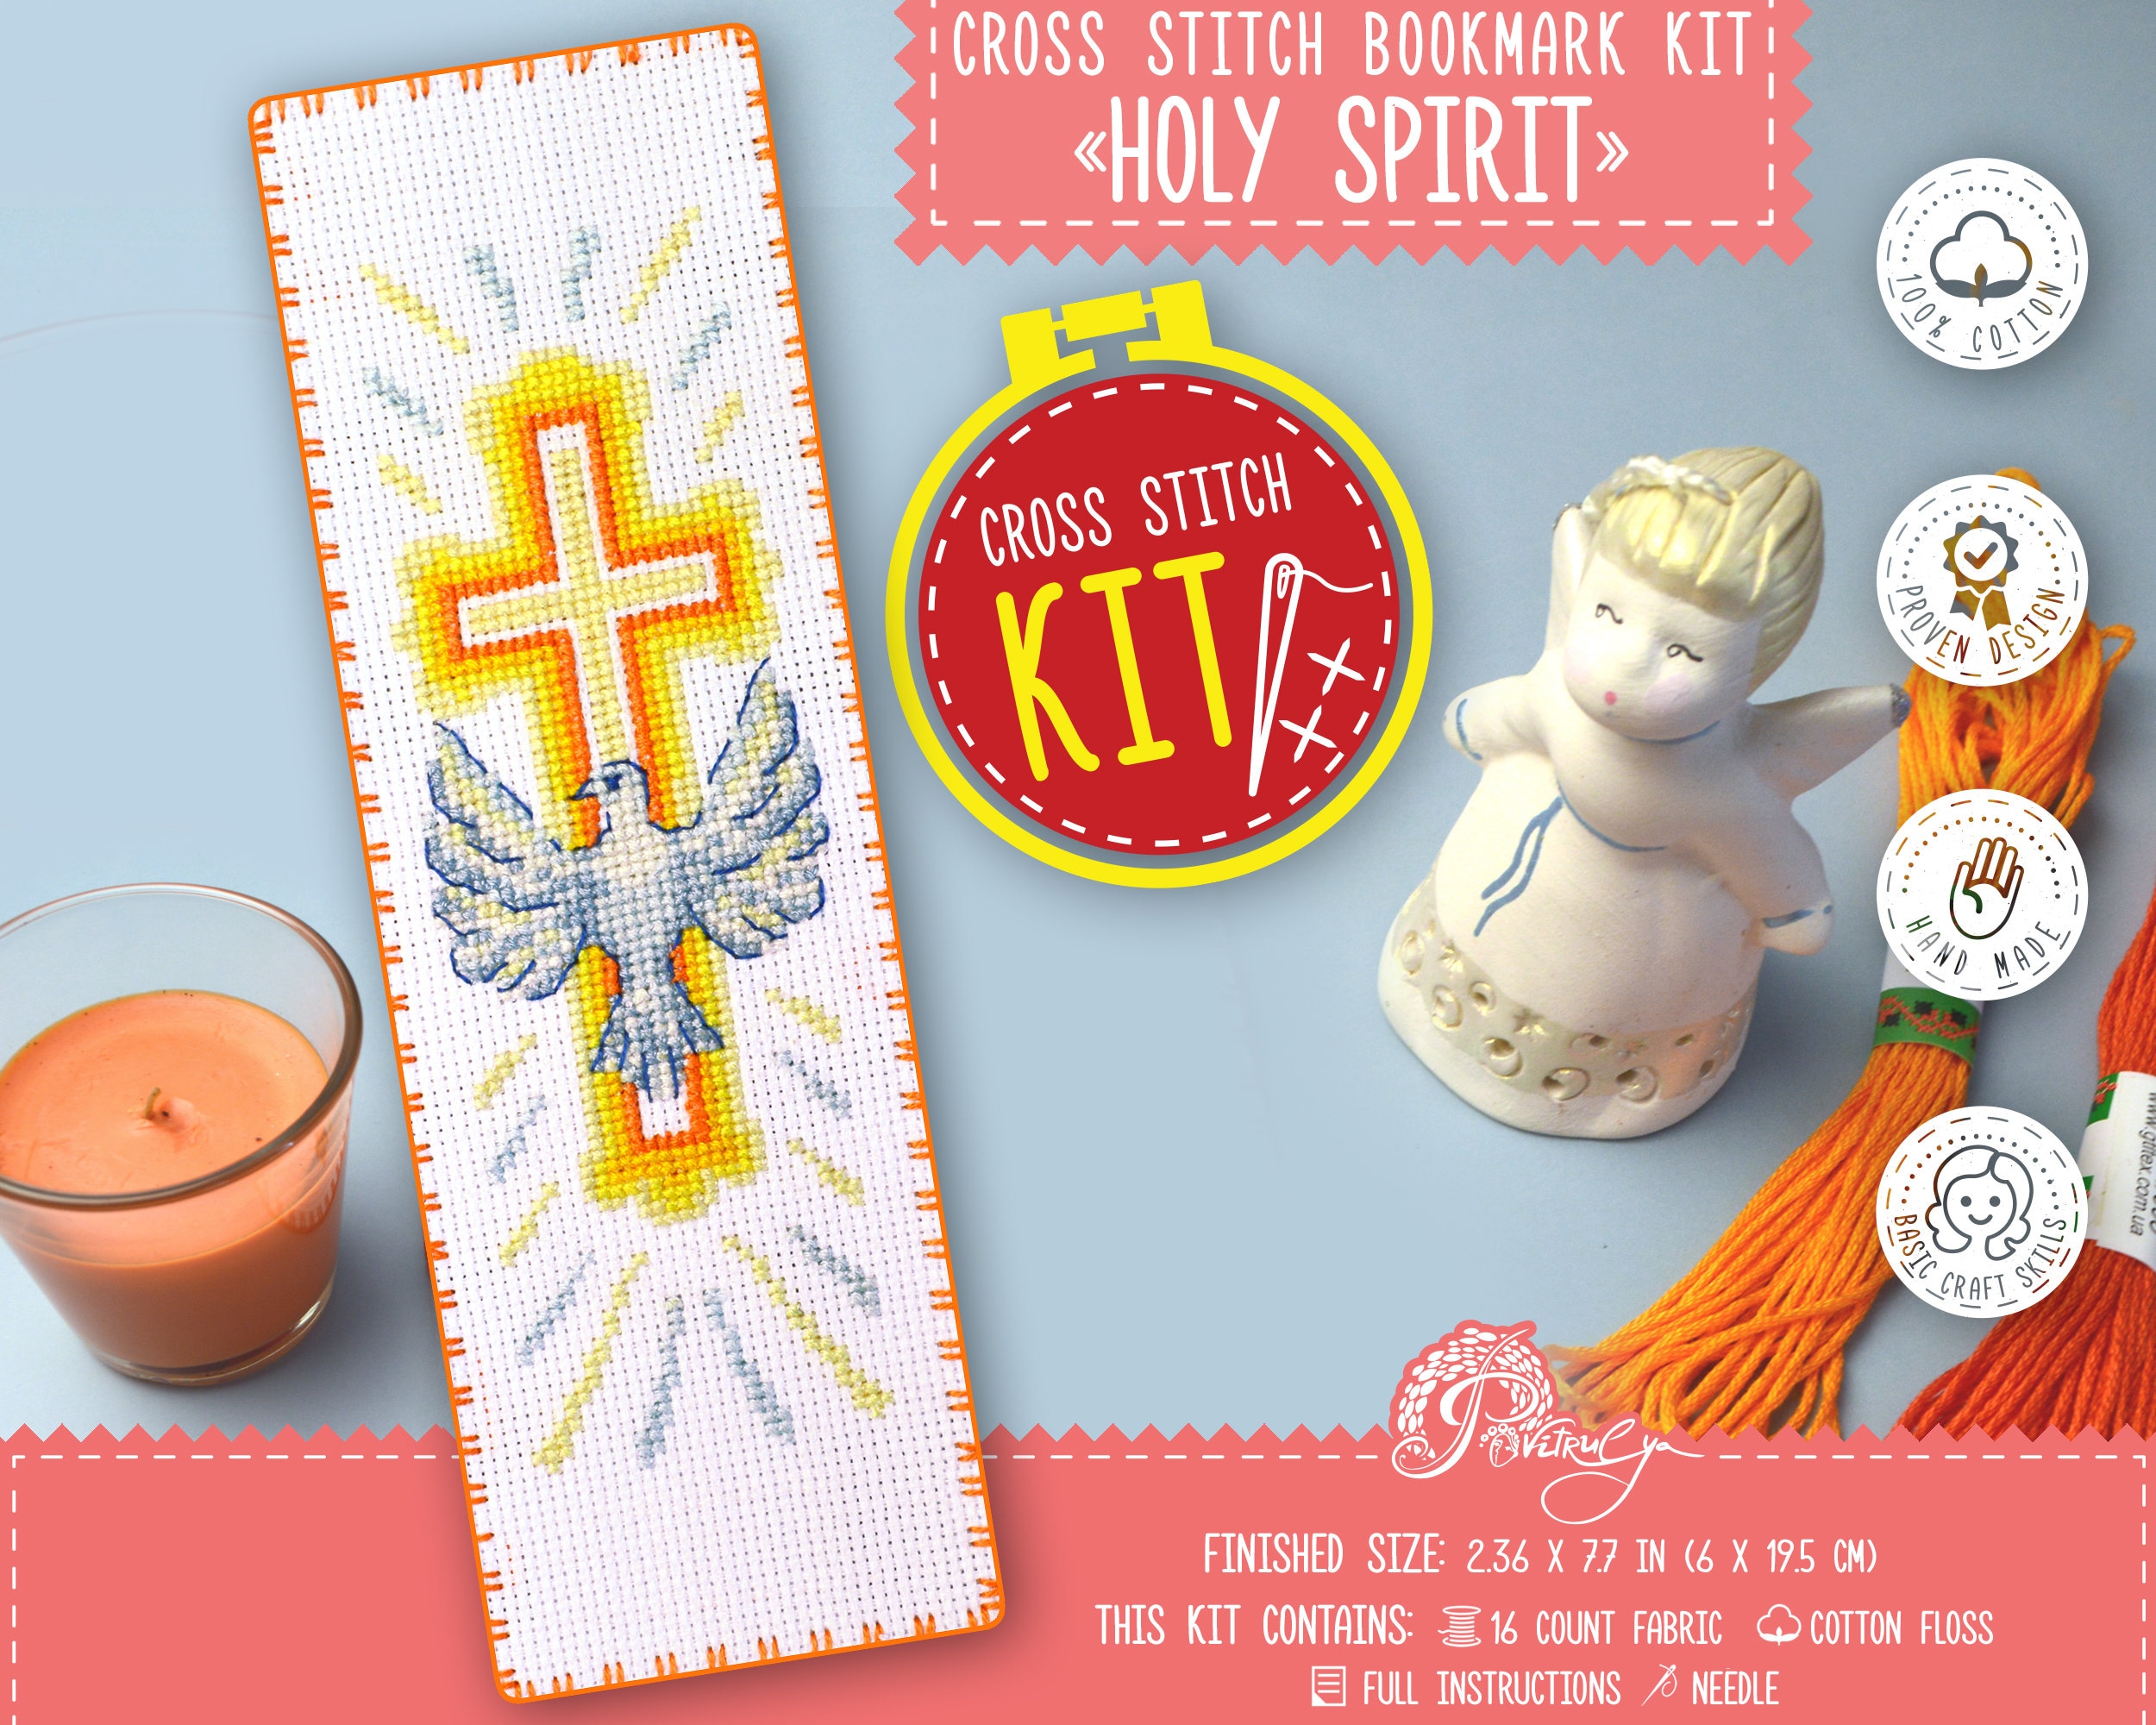 Believe in Angels Cross Stitch Bookmark Kit Janlynn - Total